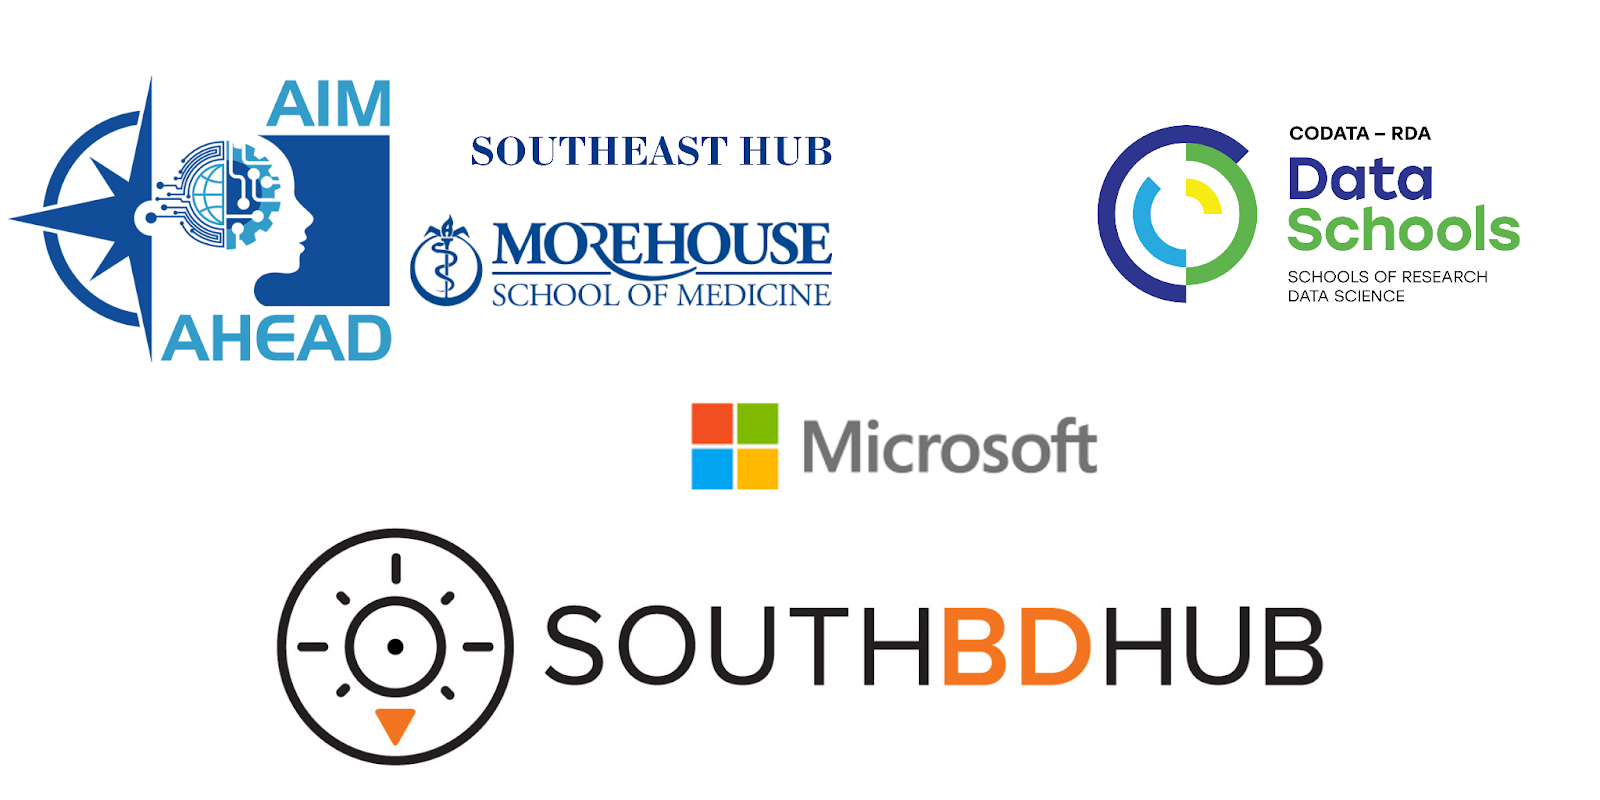 South Big Data Hub